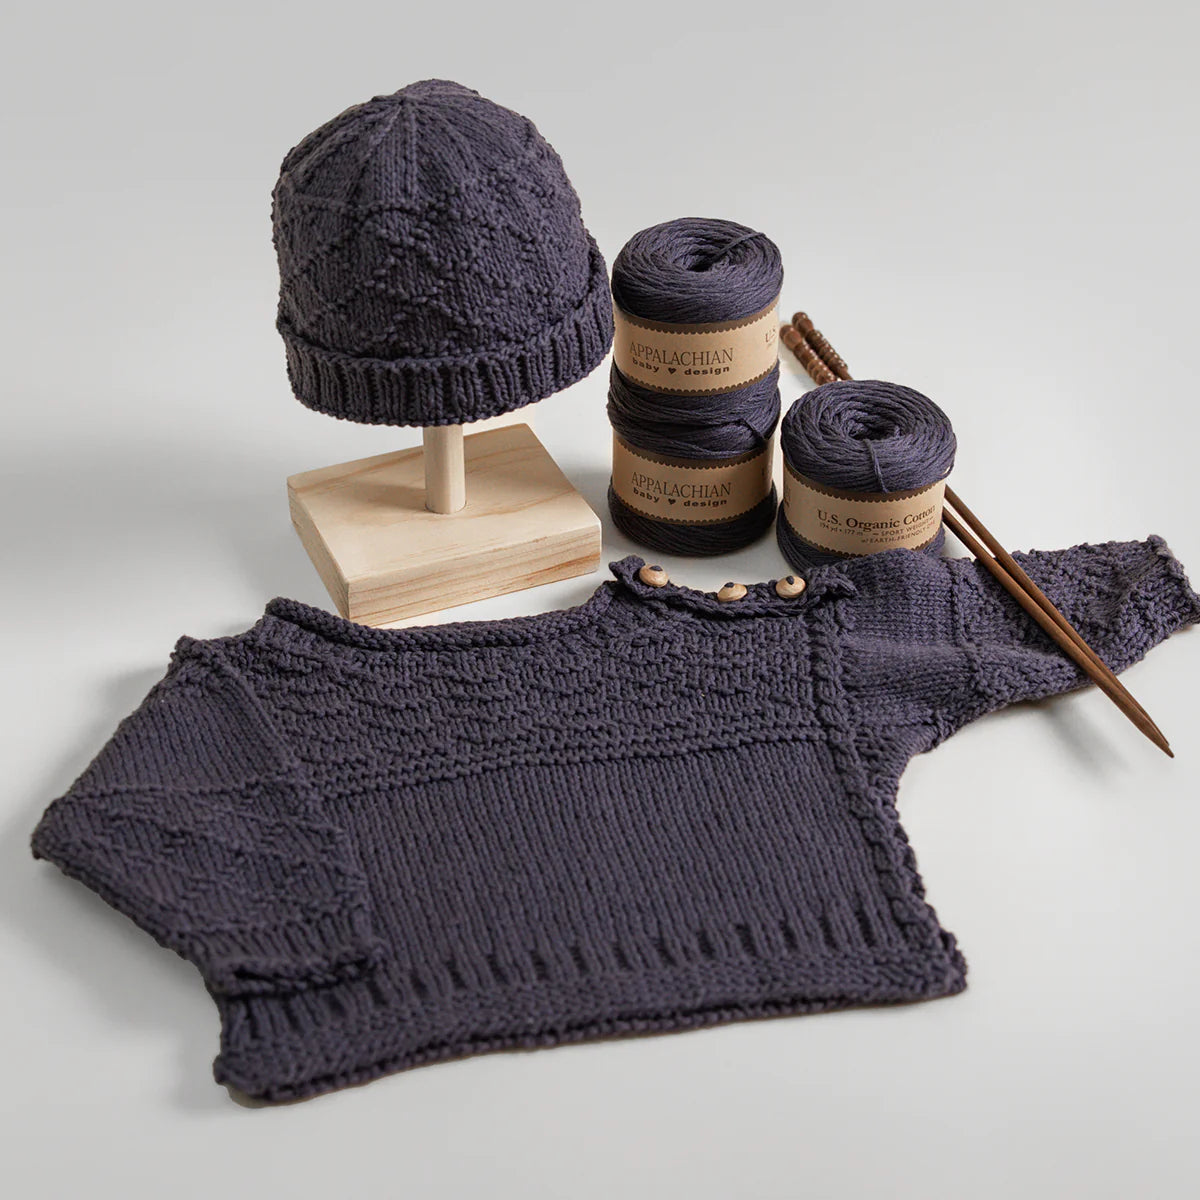 Appalachia Baby Cotton Gansey Sweater & Watch Cap Set